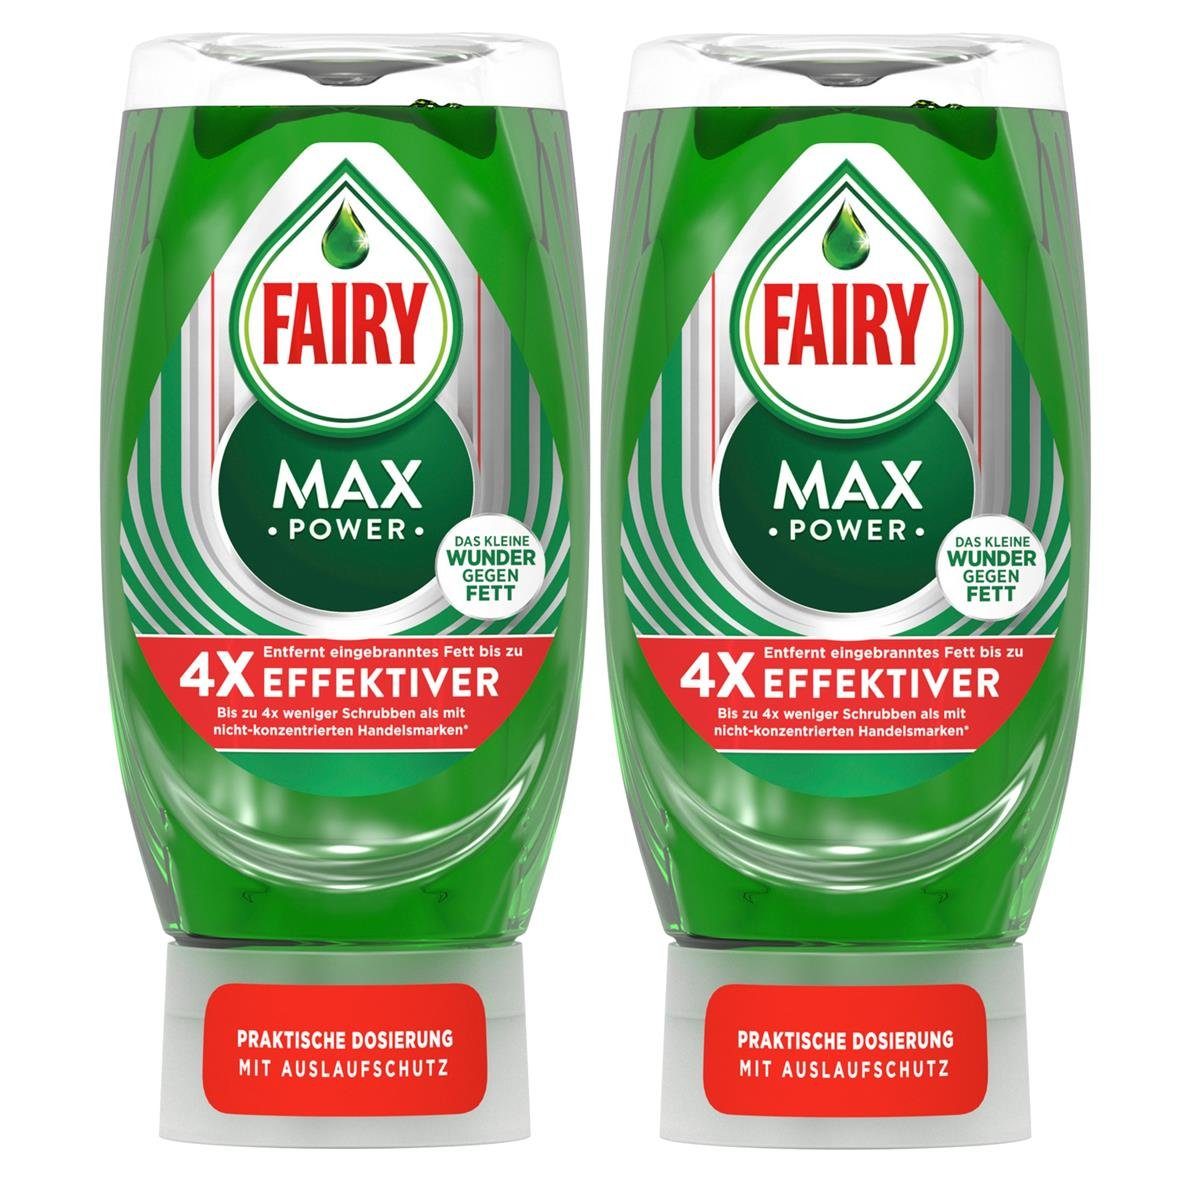 Fairy Fairy Spülmittel Max Power 370ml - Wunder gegen Fett (2er Pack) Geschirrspülmittel